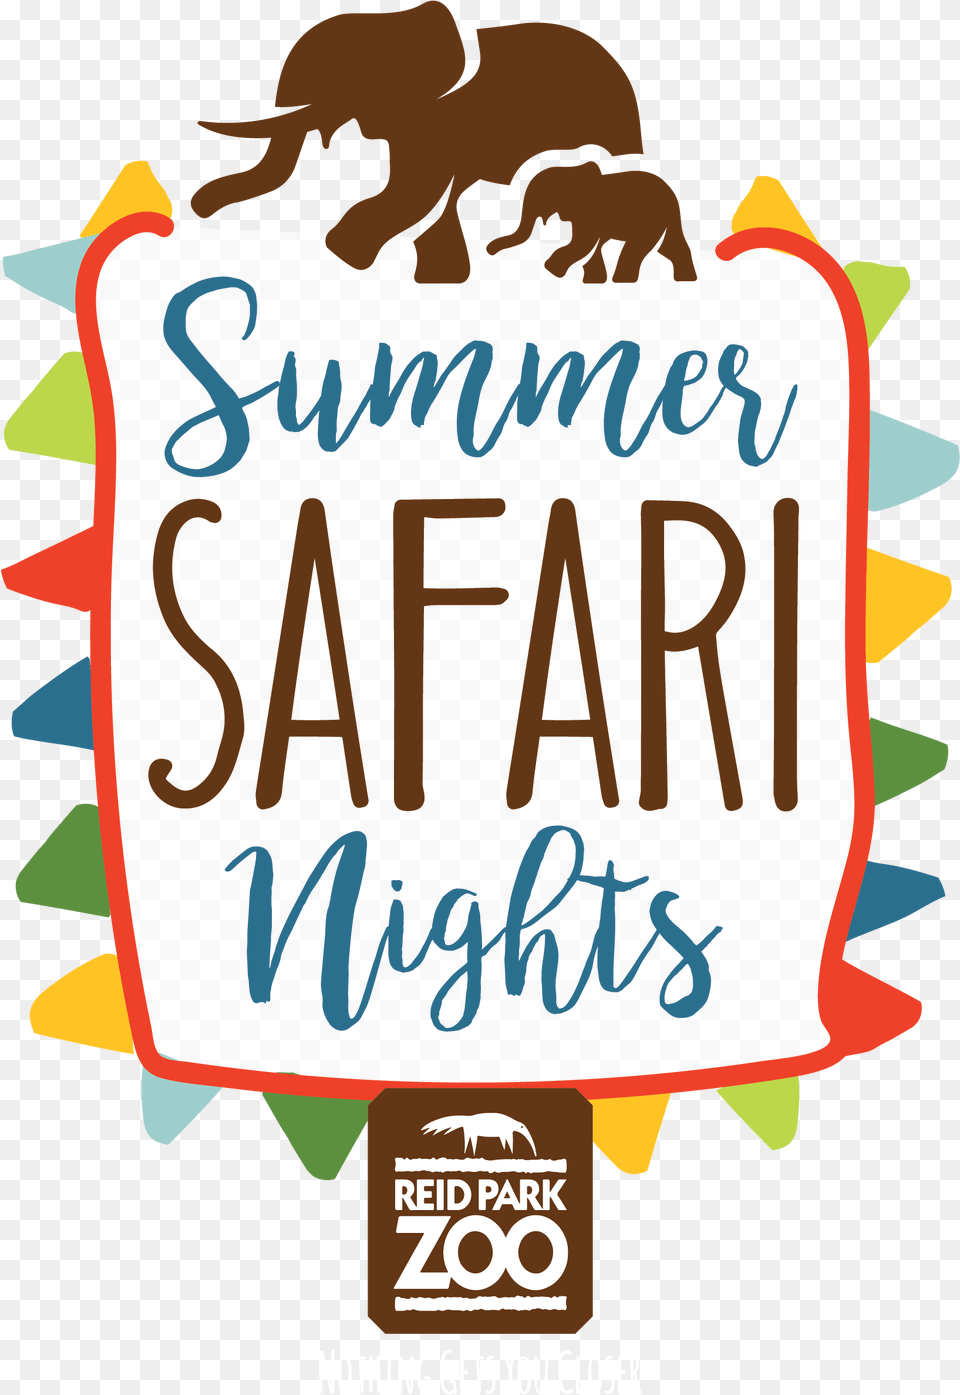 Beyond Tucson Summer Safari Logo Clip Art, Advertisement, Poster, Animal, Elephant Png Image